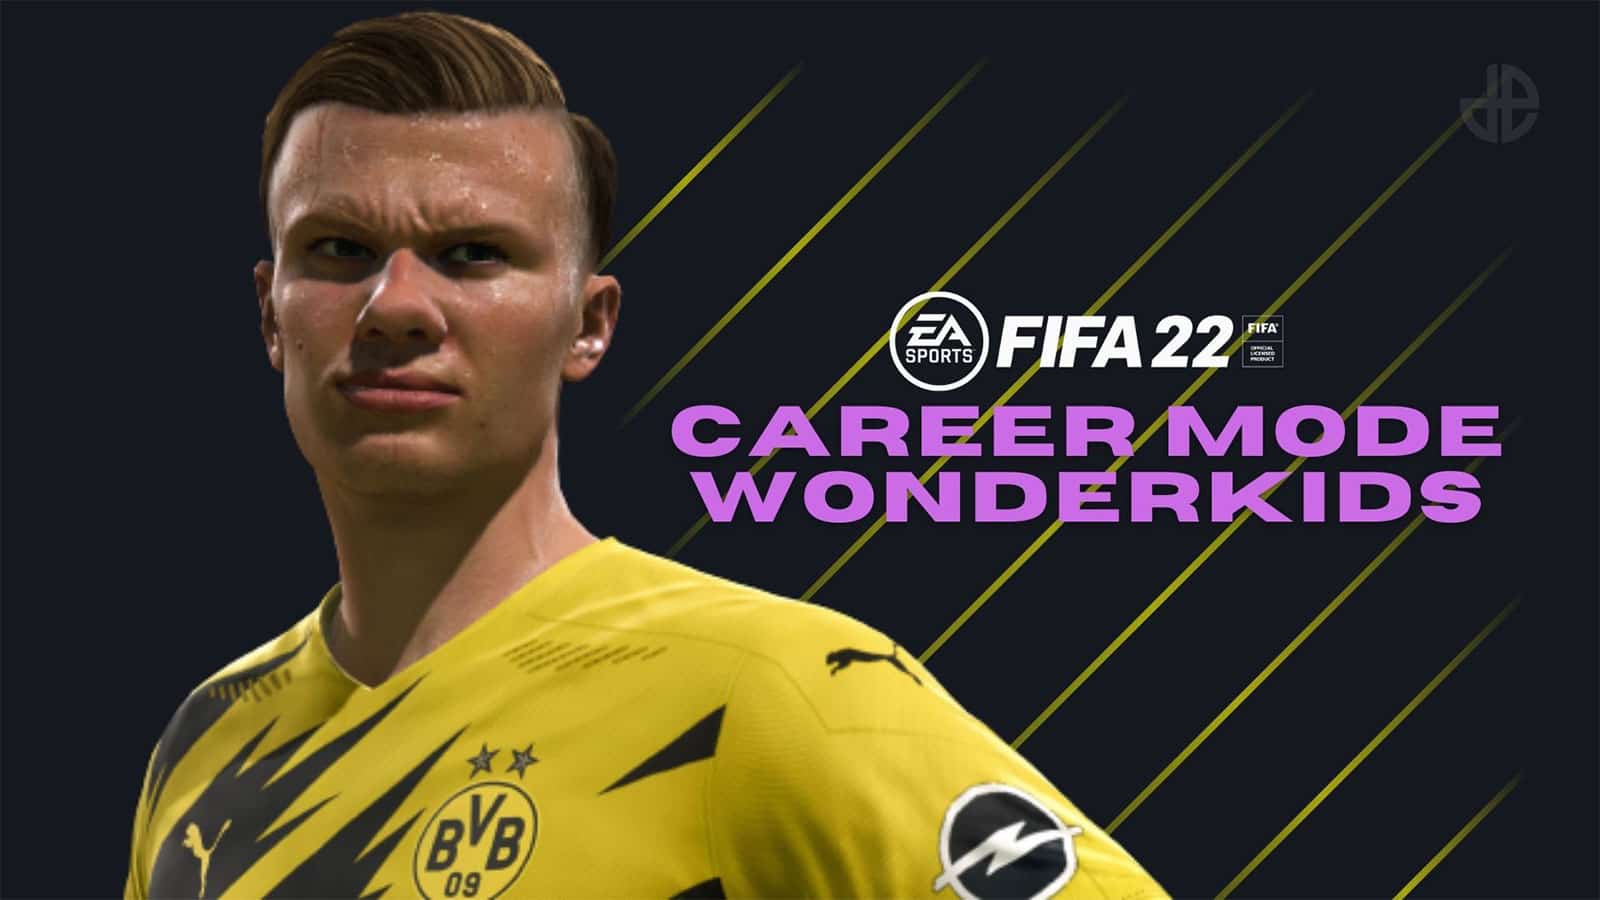 FIFA 22 Career Mode wonderkids